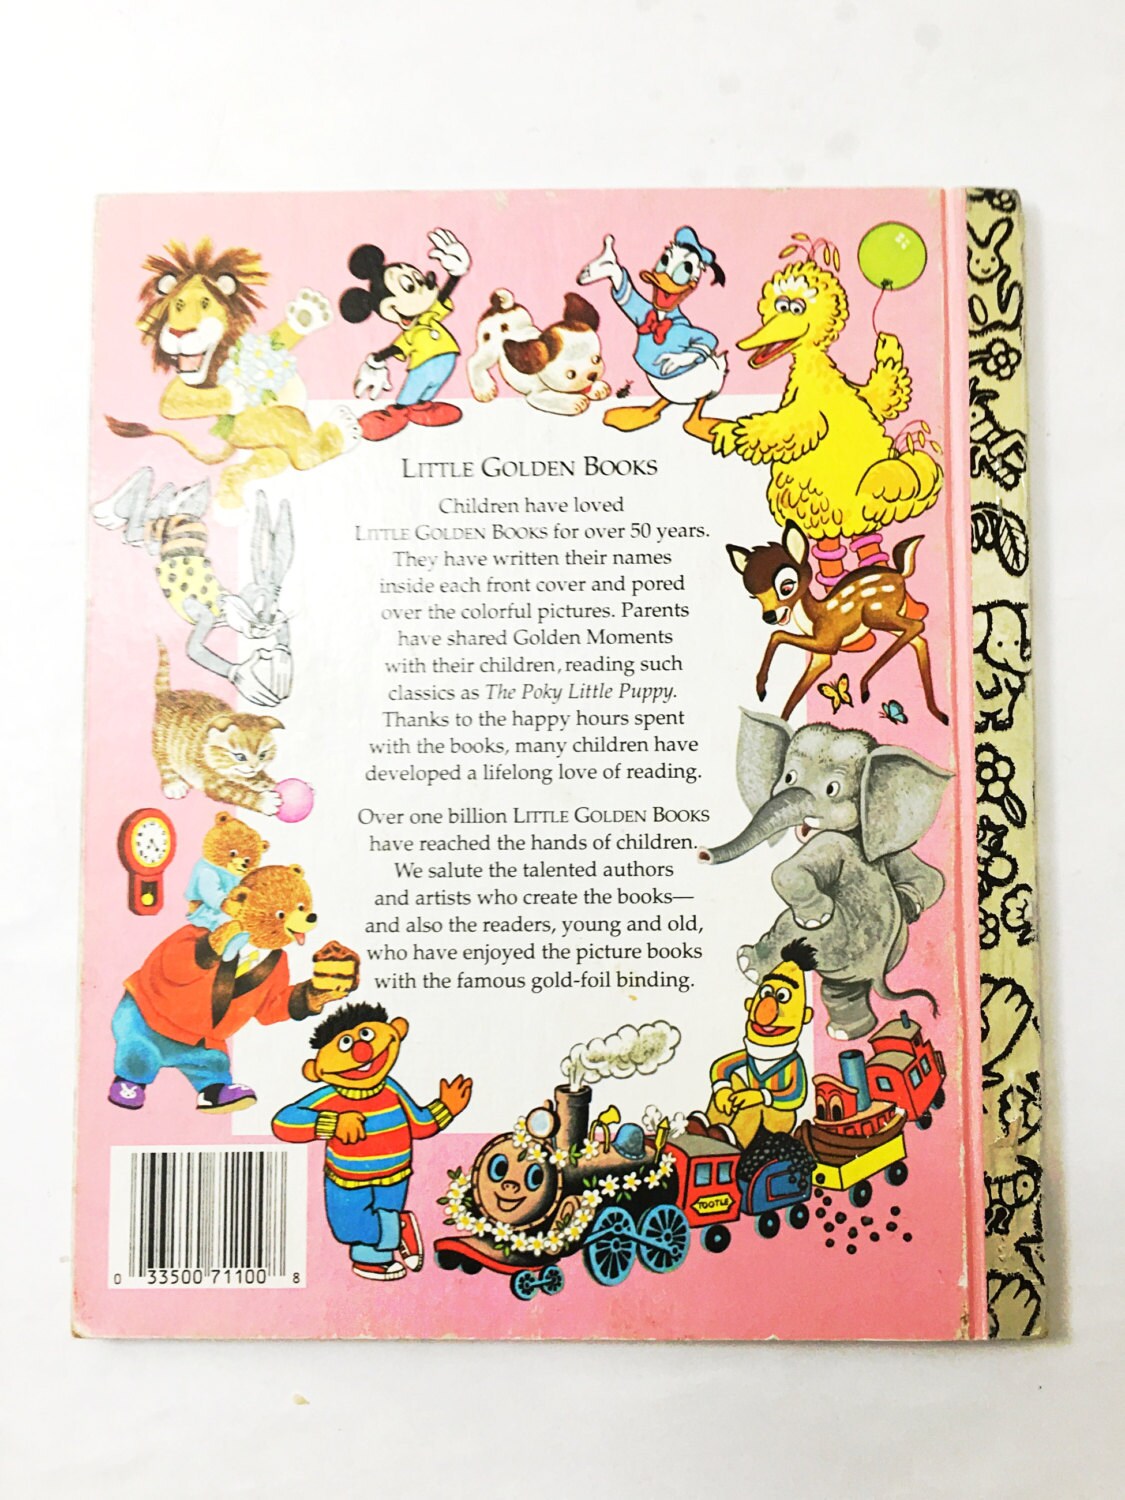 Little Golden Book. Walt Disney's Goof Troop. Great Egg-Spectacular. FIRST EDITION vintage children's book 107-87. Goofy book. Yellow decor